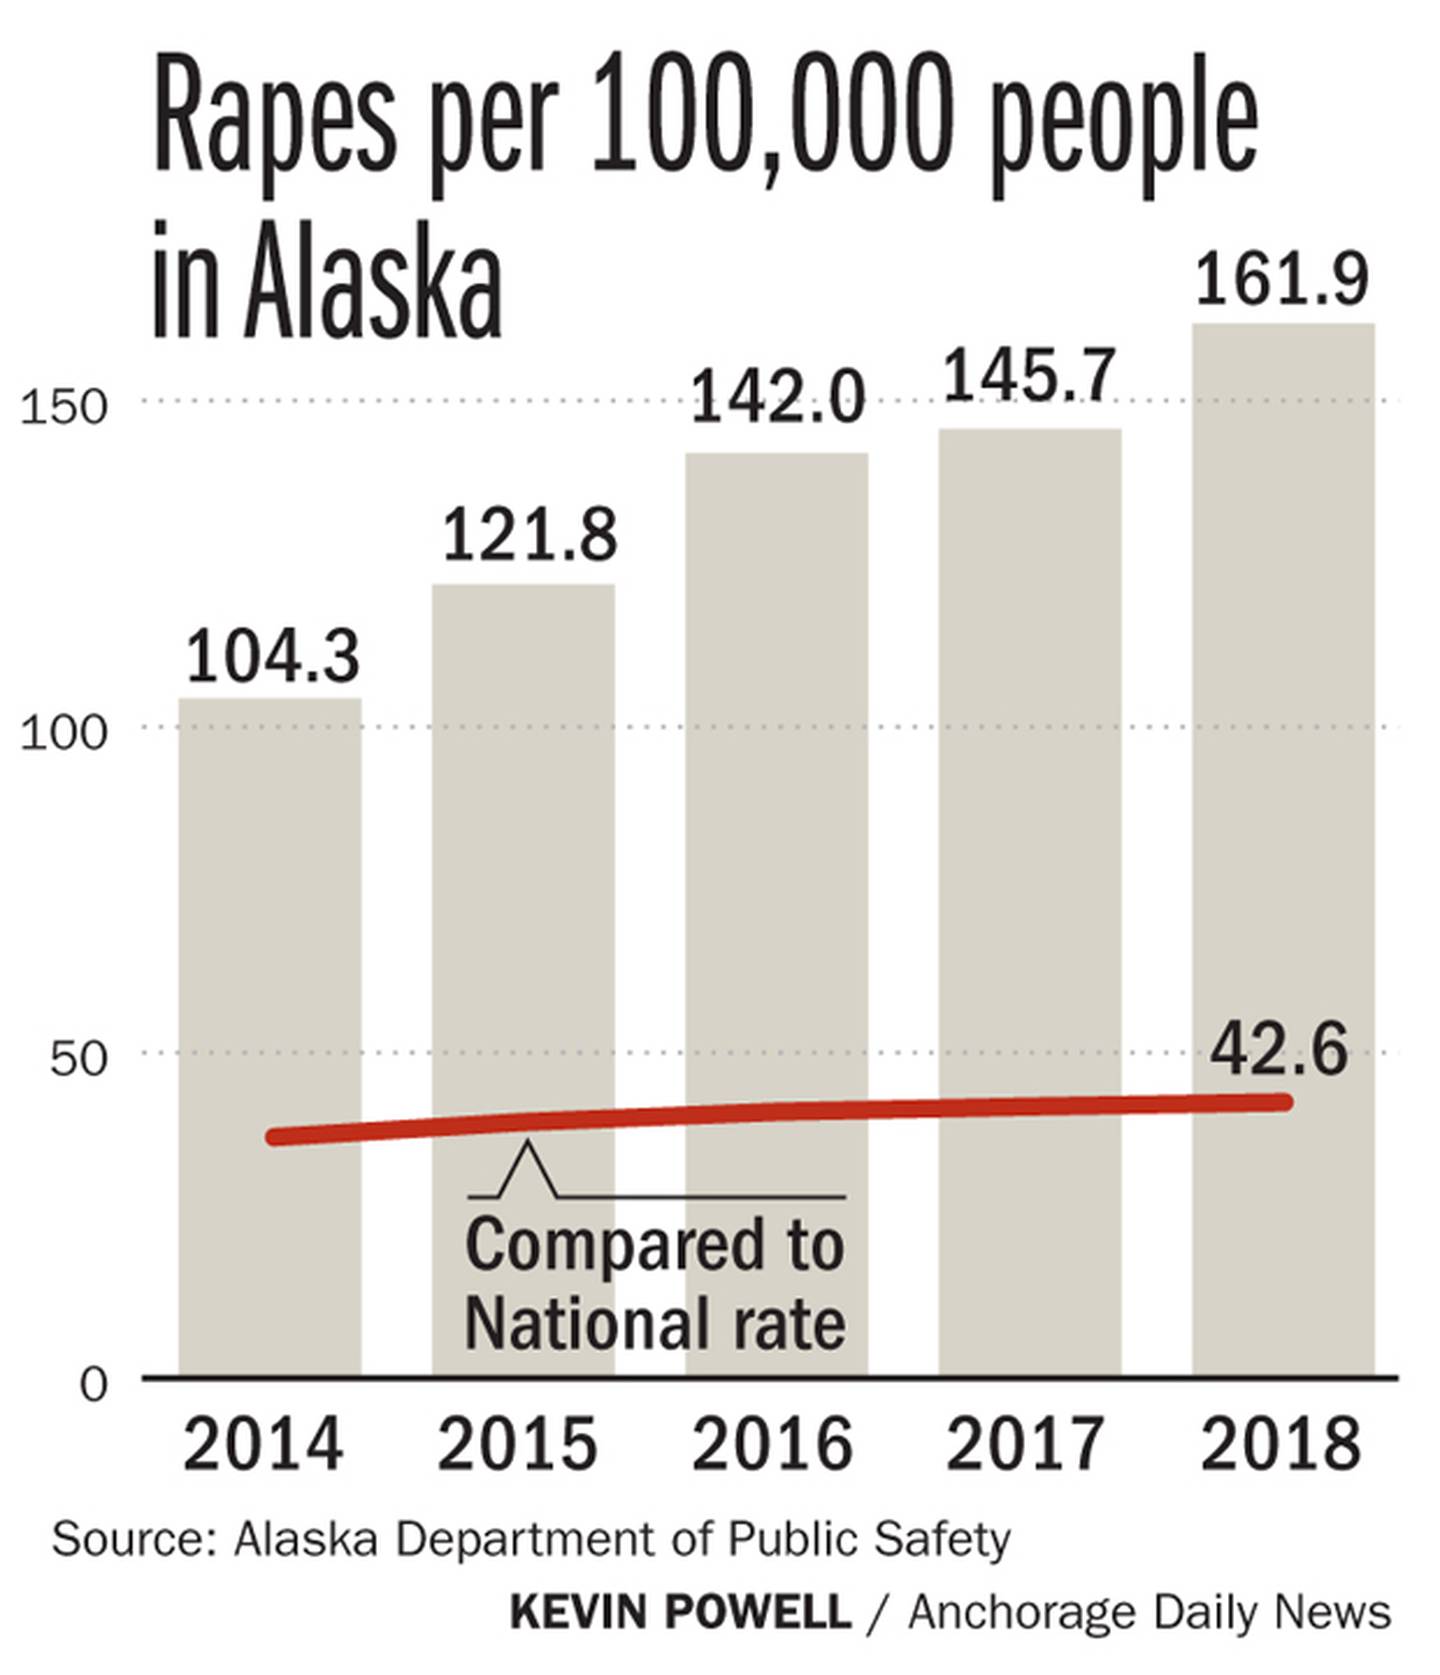 Rapes per 100,000 people in Alaska